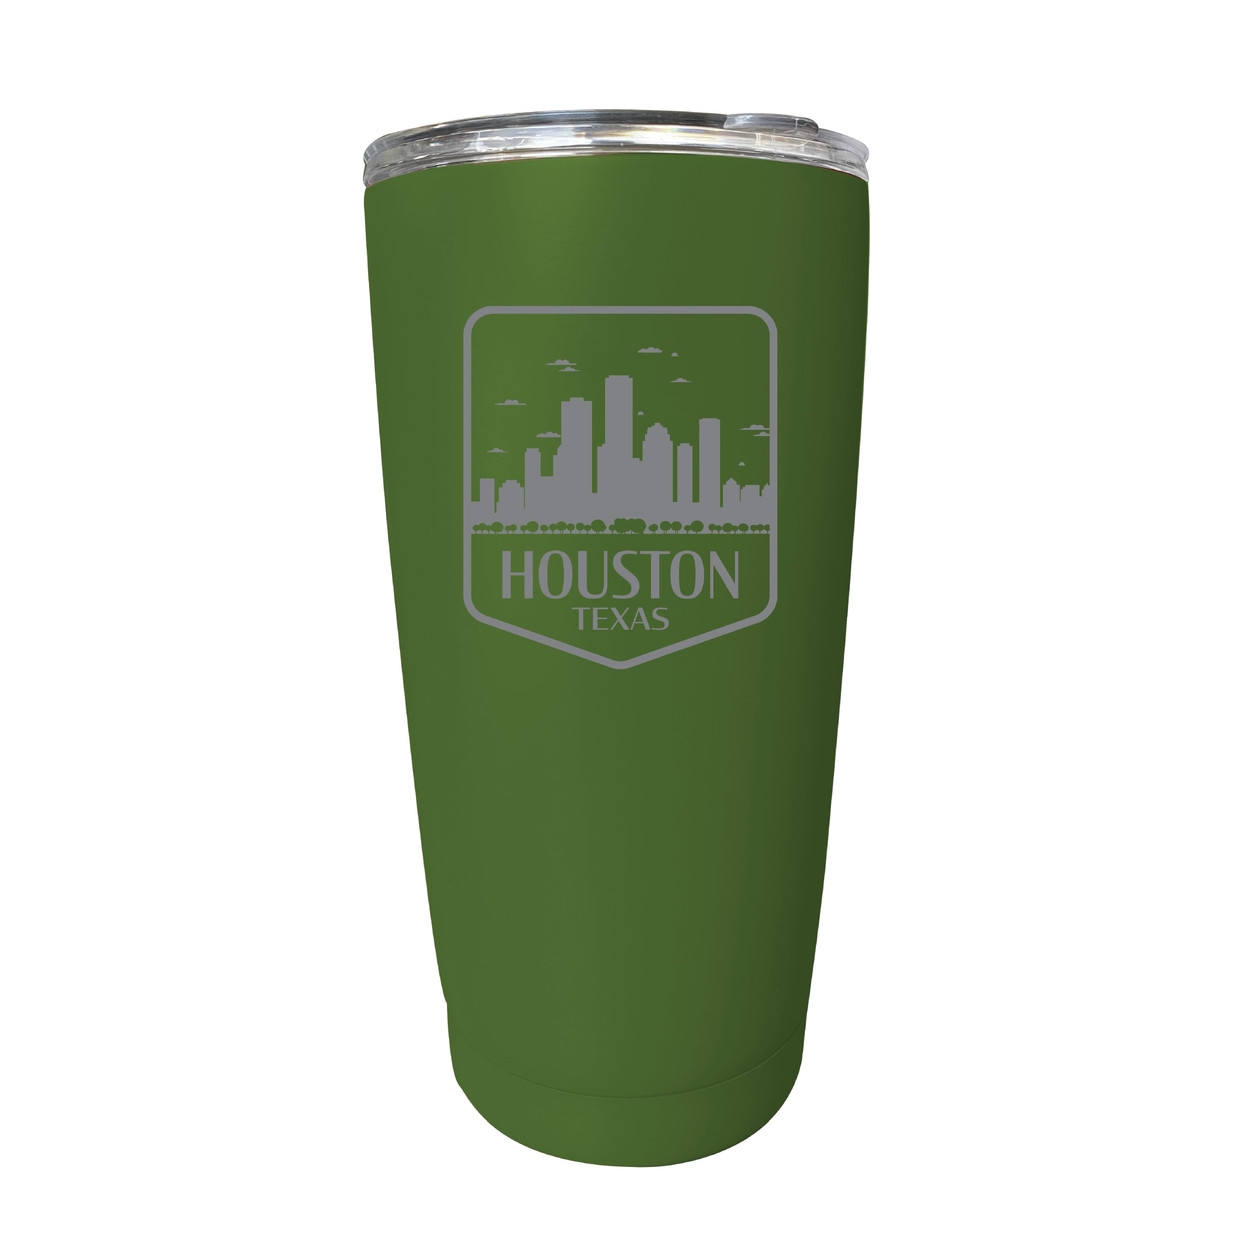 Houston Texas Souvenir 16 Oz Engraved Stainless Steel Insulated Tumbler - Green,,4-Pack